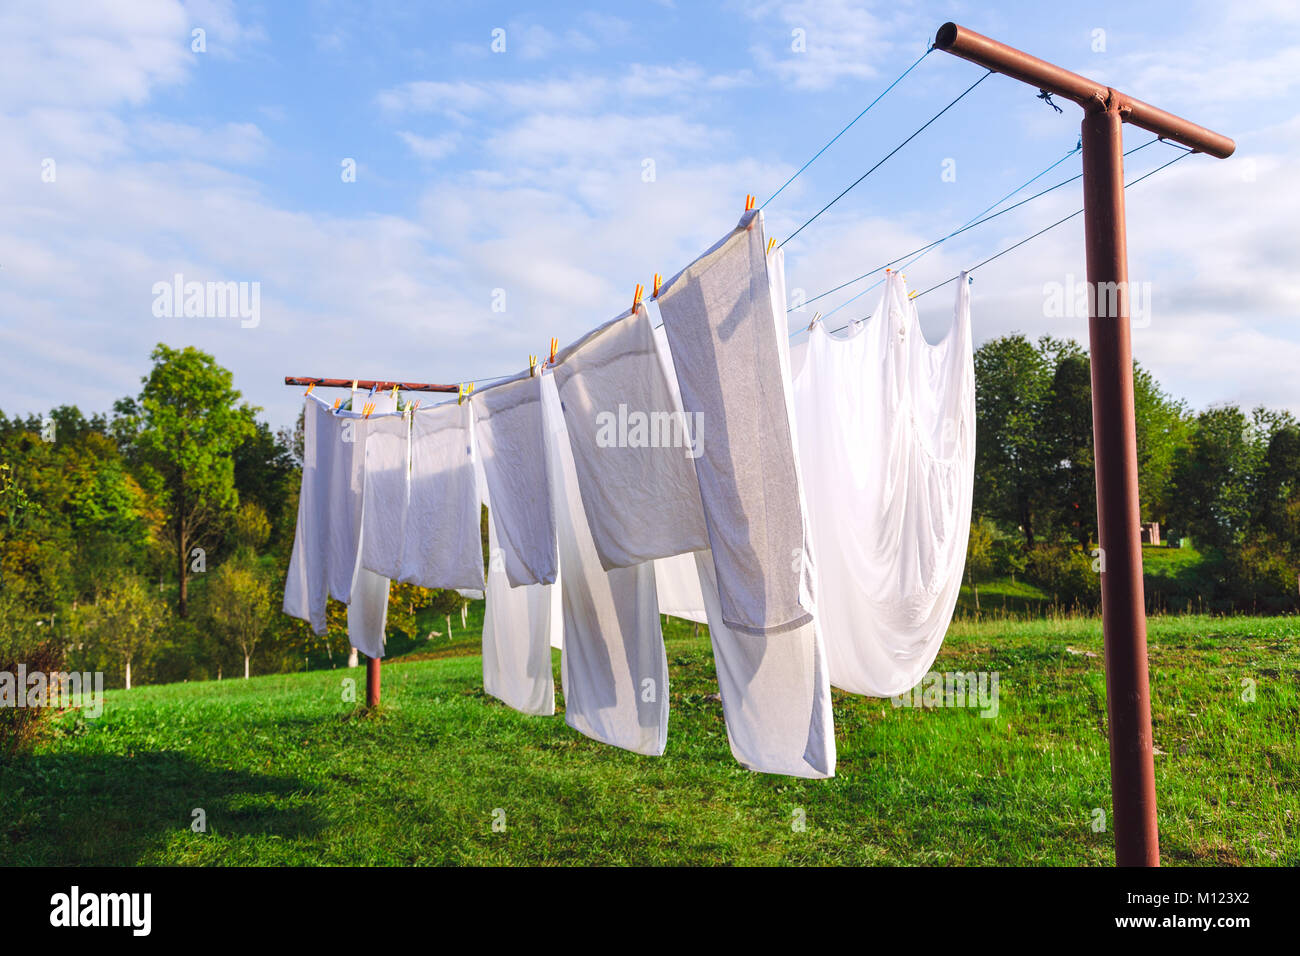 https://c8.alamy.com/comp/M123X2/fresh-clean-white-sheet-drying-on-washing-line-in-outdoor-M123X2.jpg